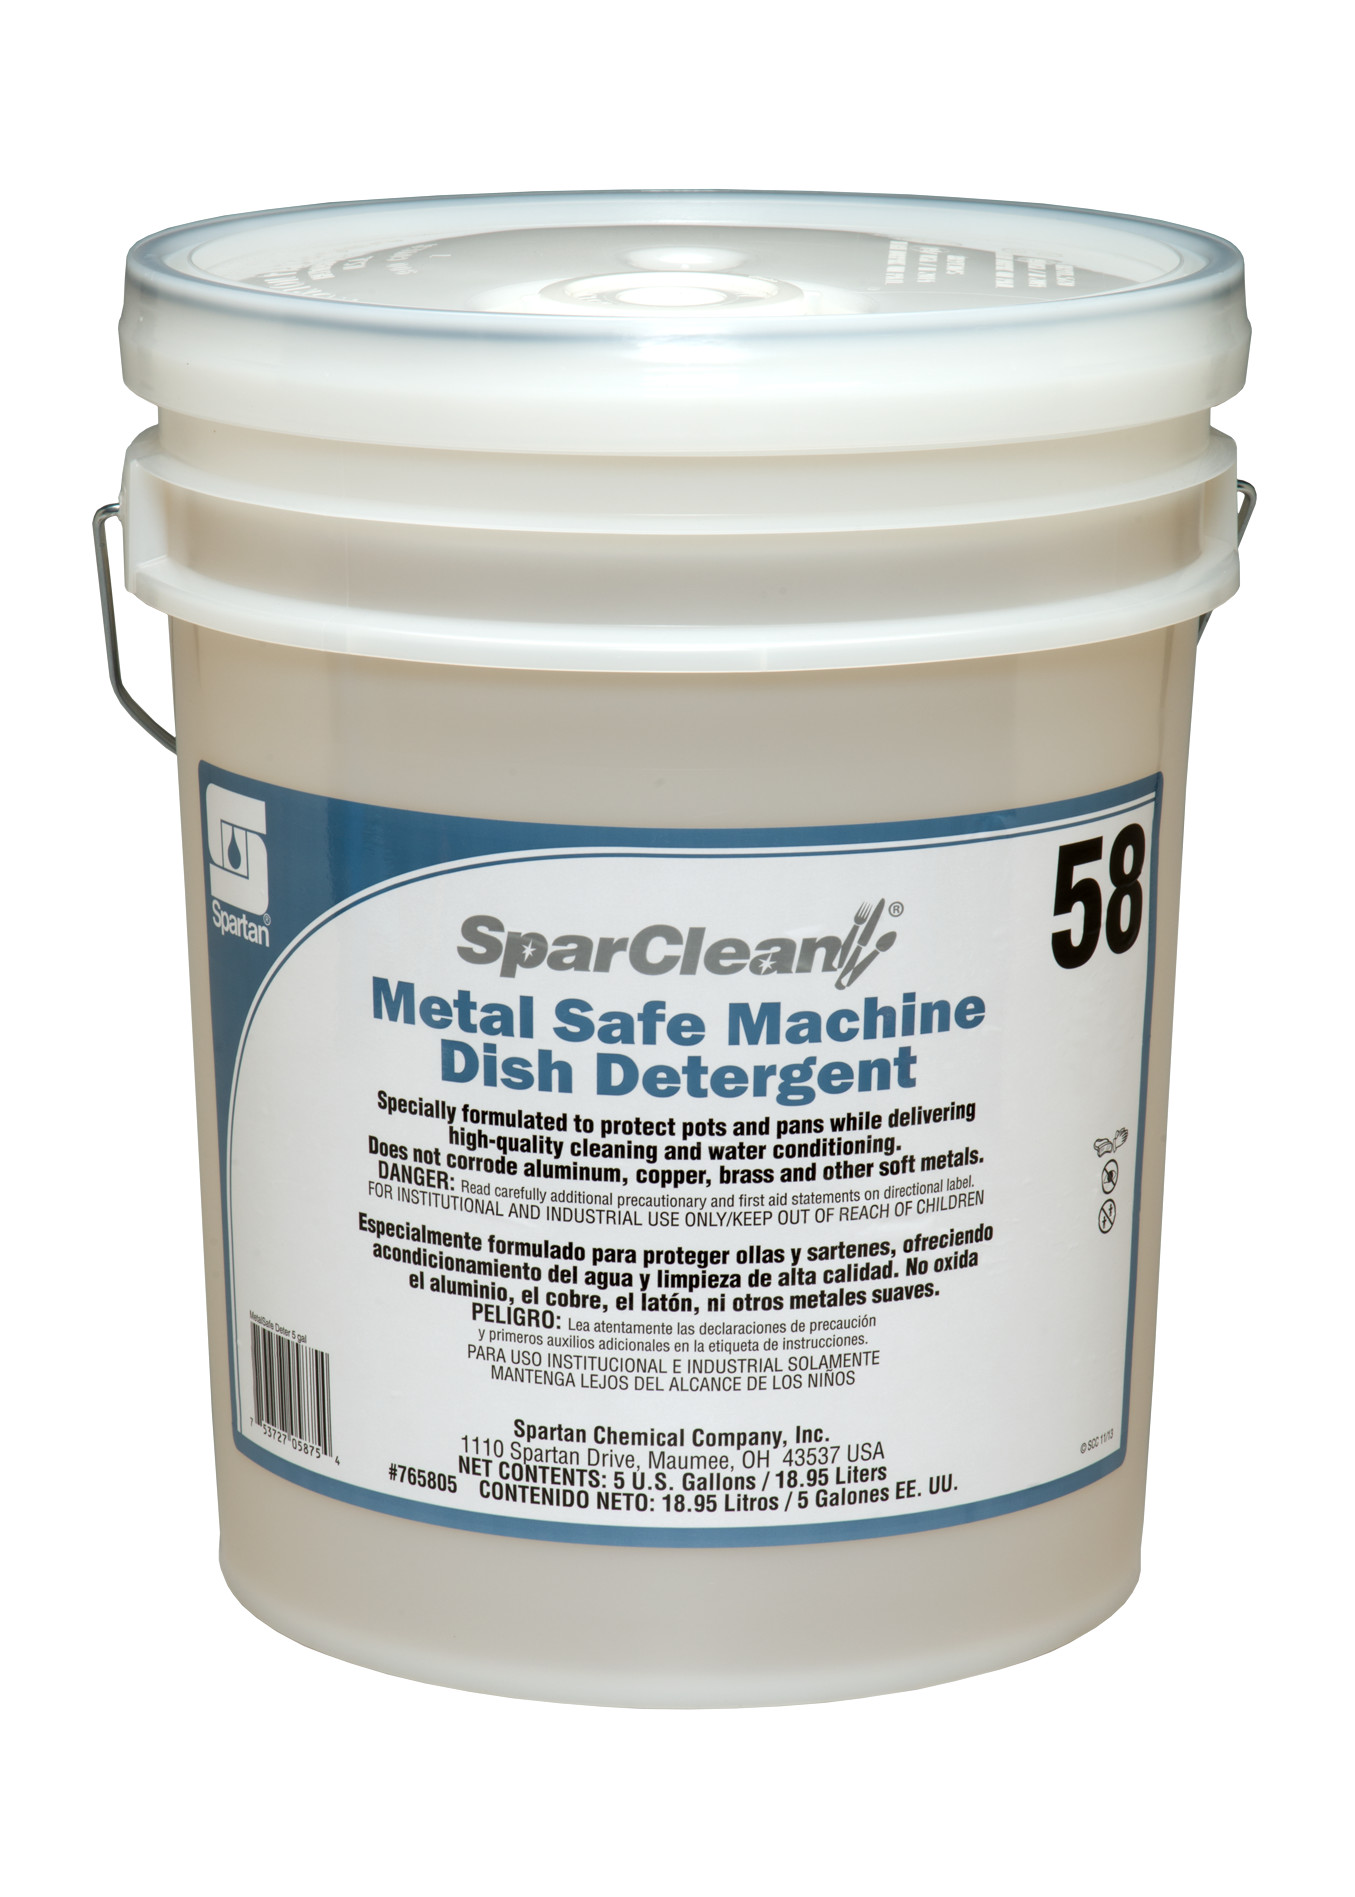 Spartan Chemical Company SparClean Metal Safe Machine Dish Detergent 58, 5 GAL PAIL